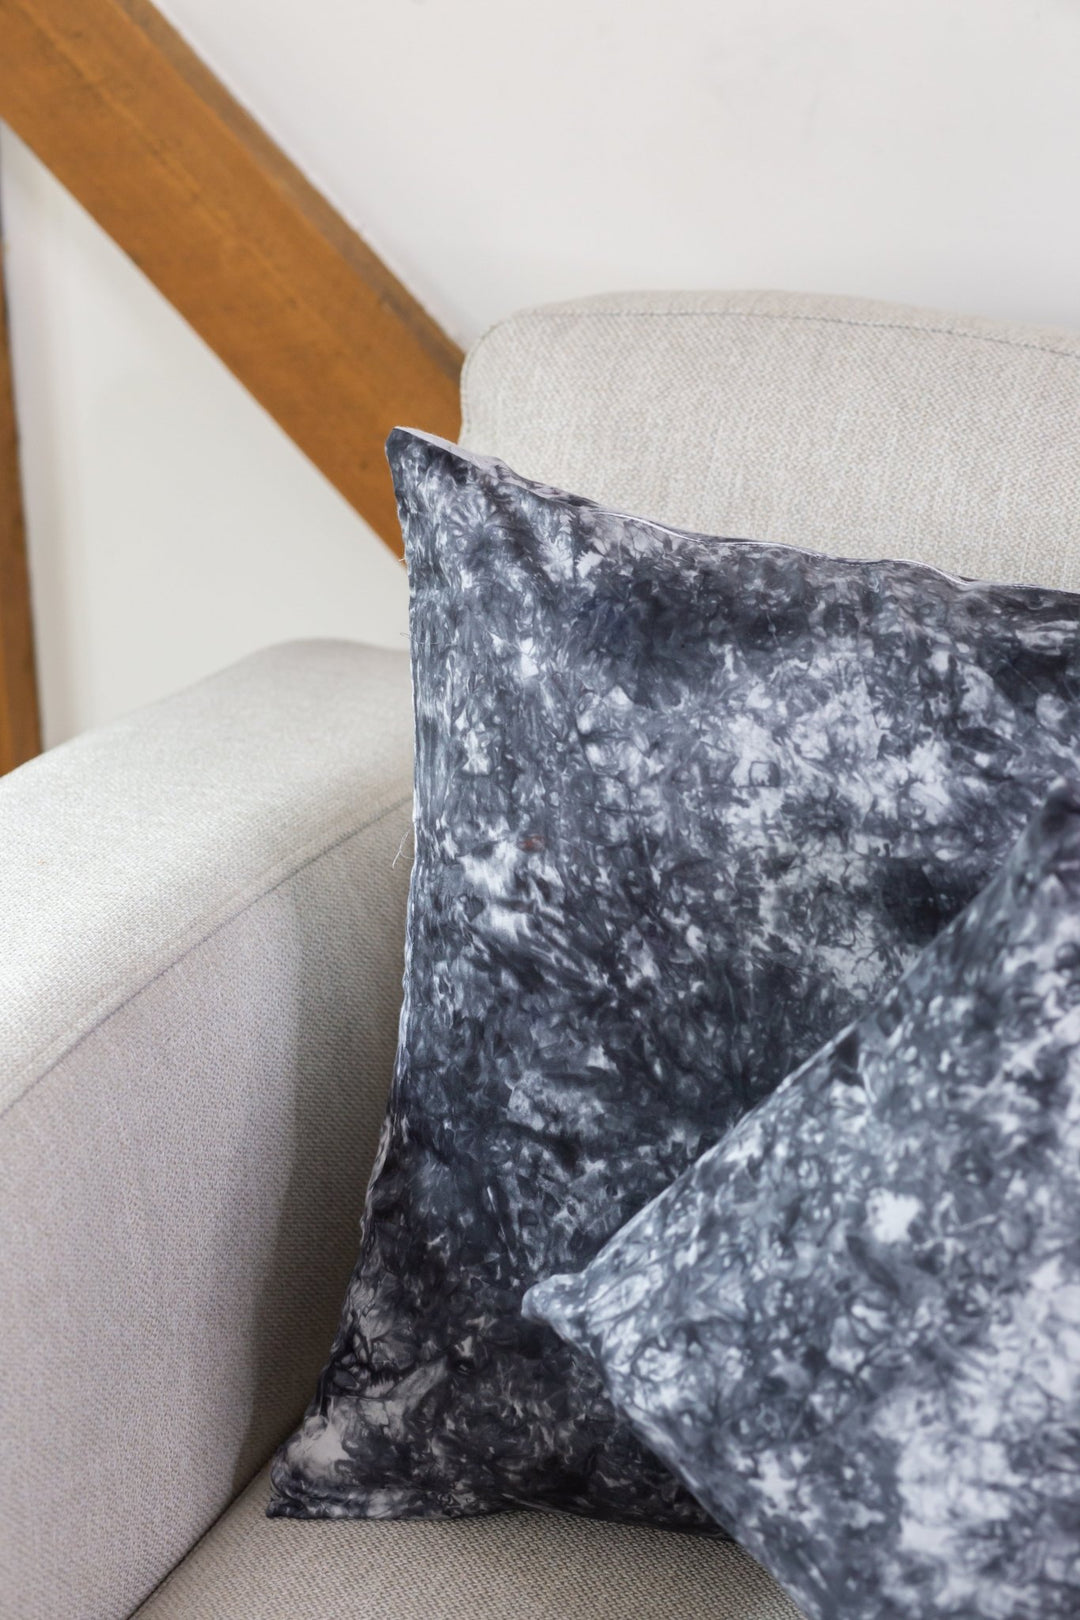 Grayscale Monochrome Cushion | Pillow - AKINSANYA FASHION